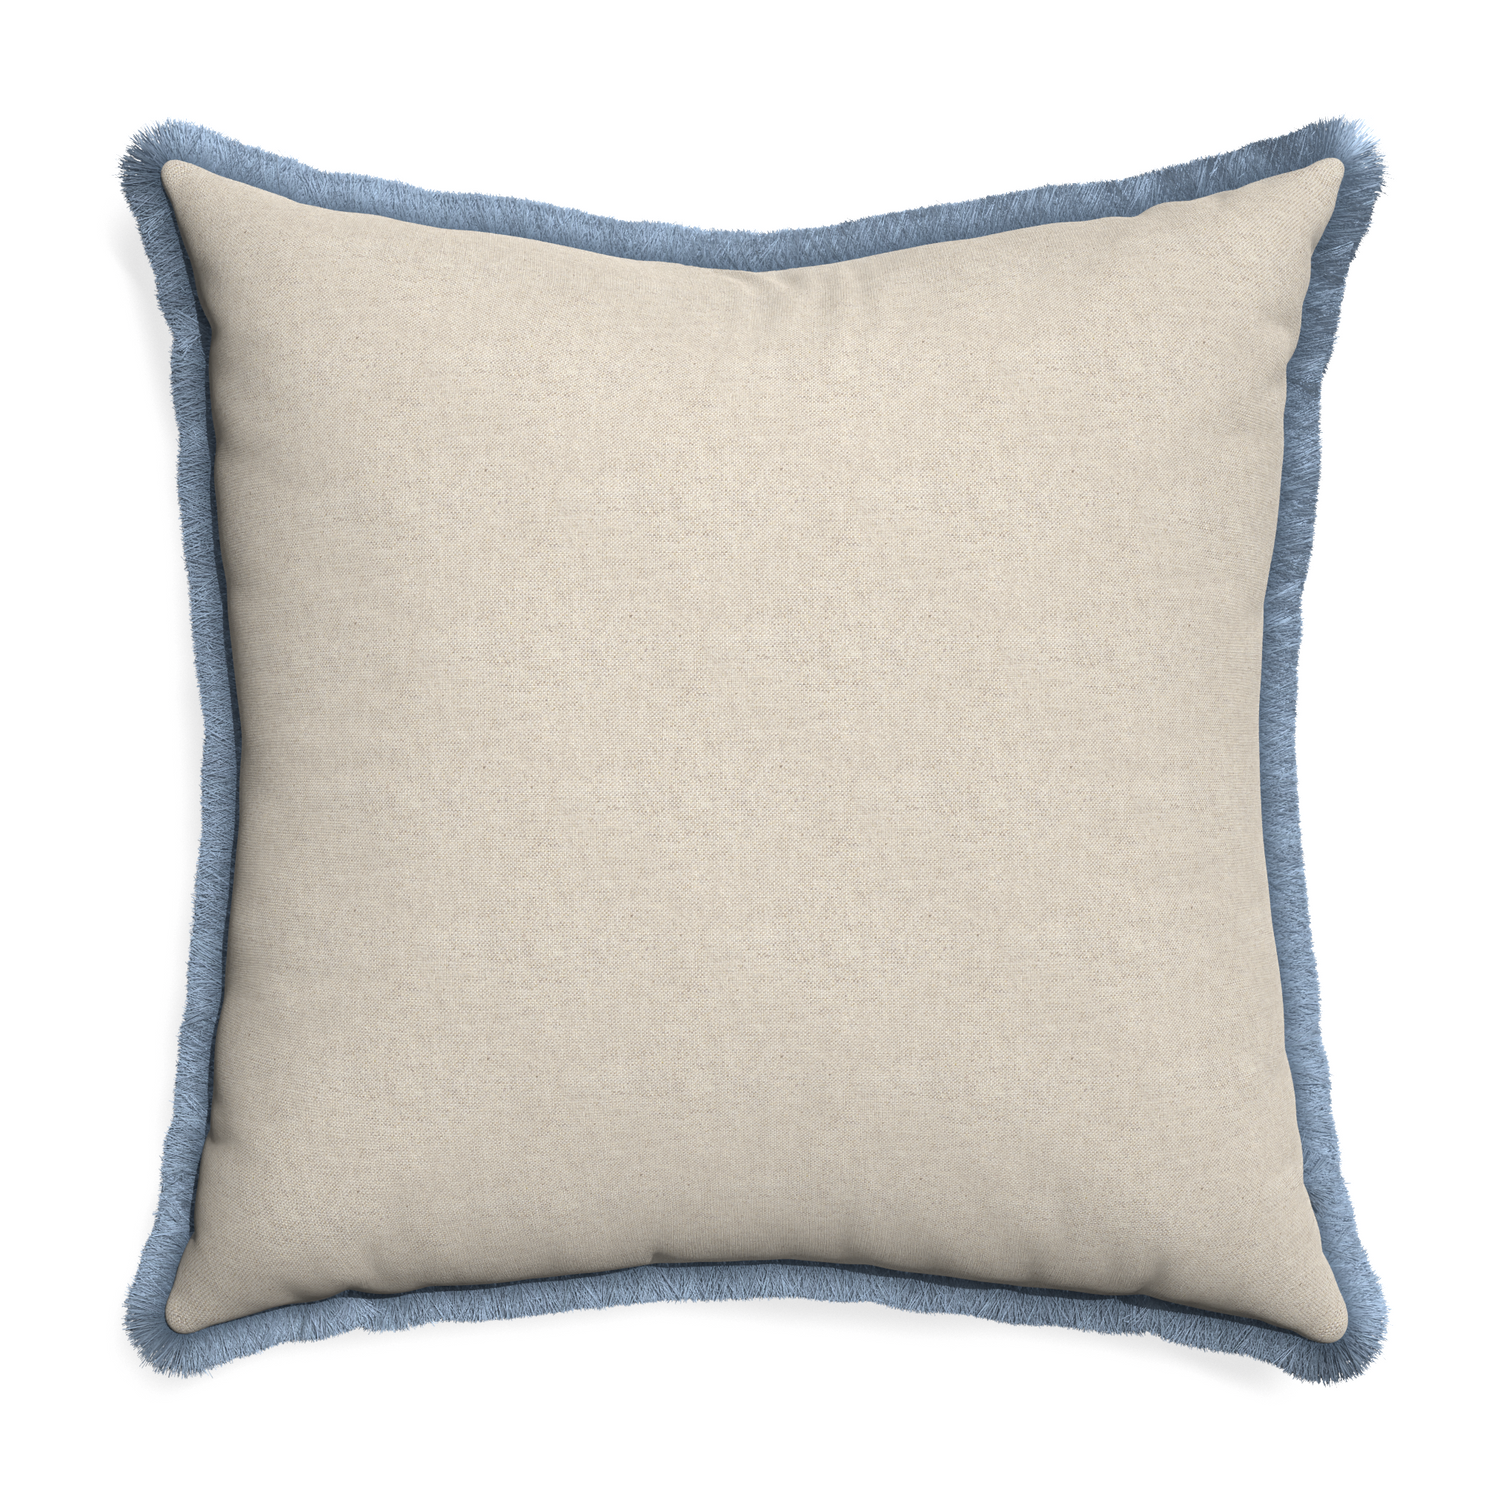 Euro-sham oat custom pillow with sky fringe on white background